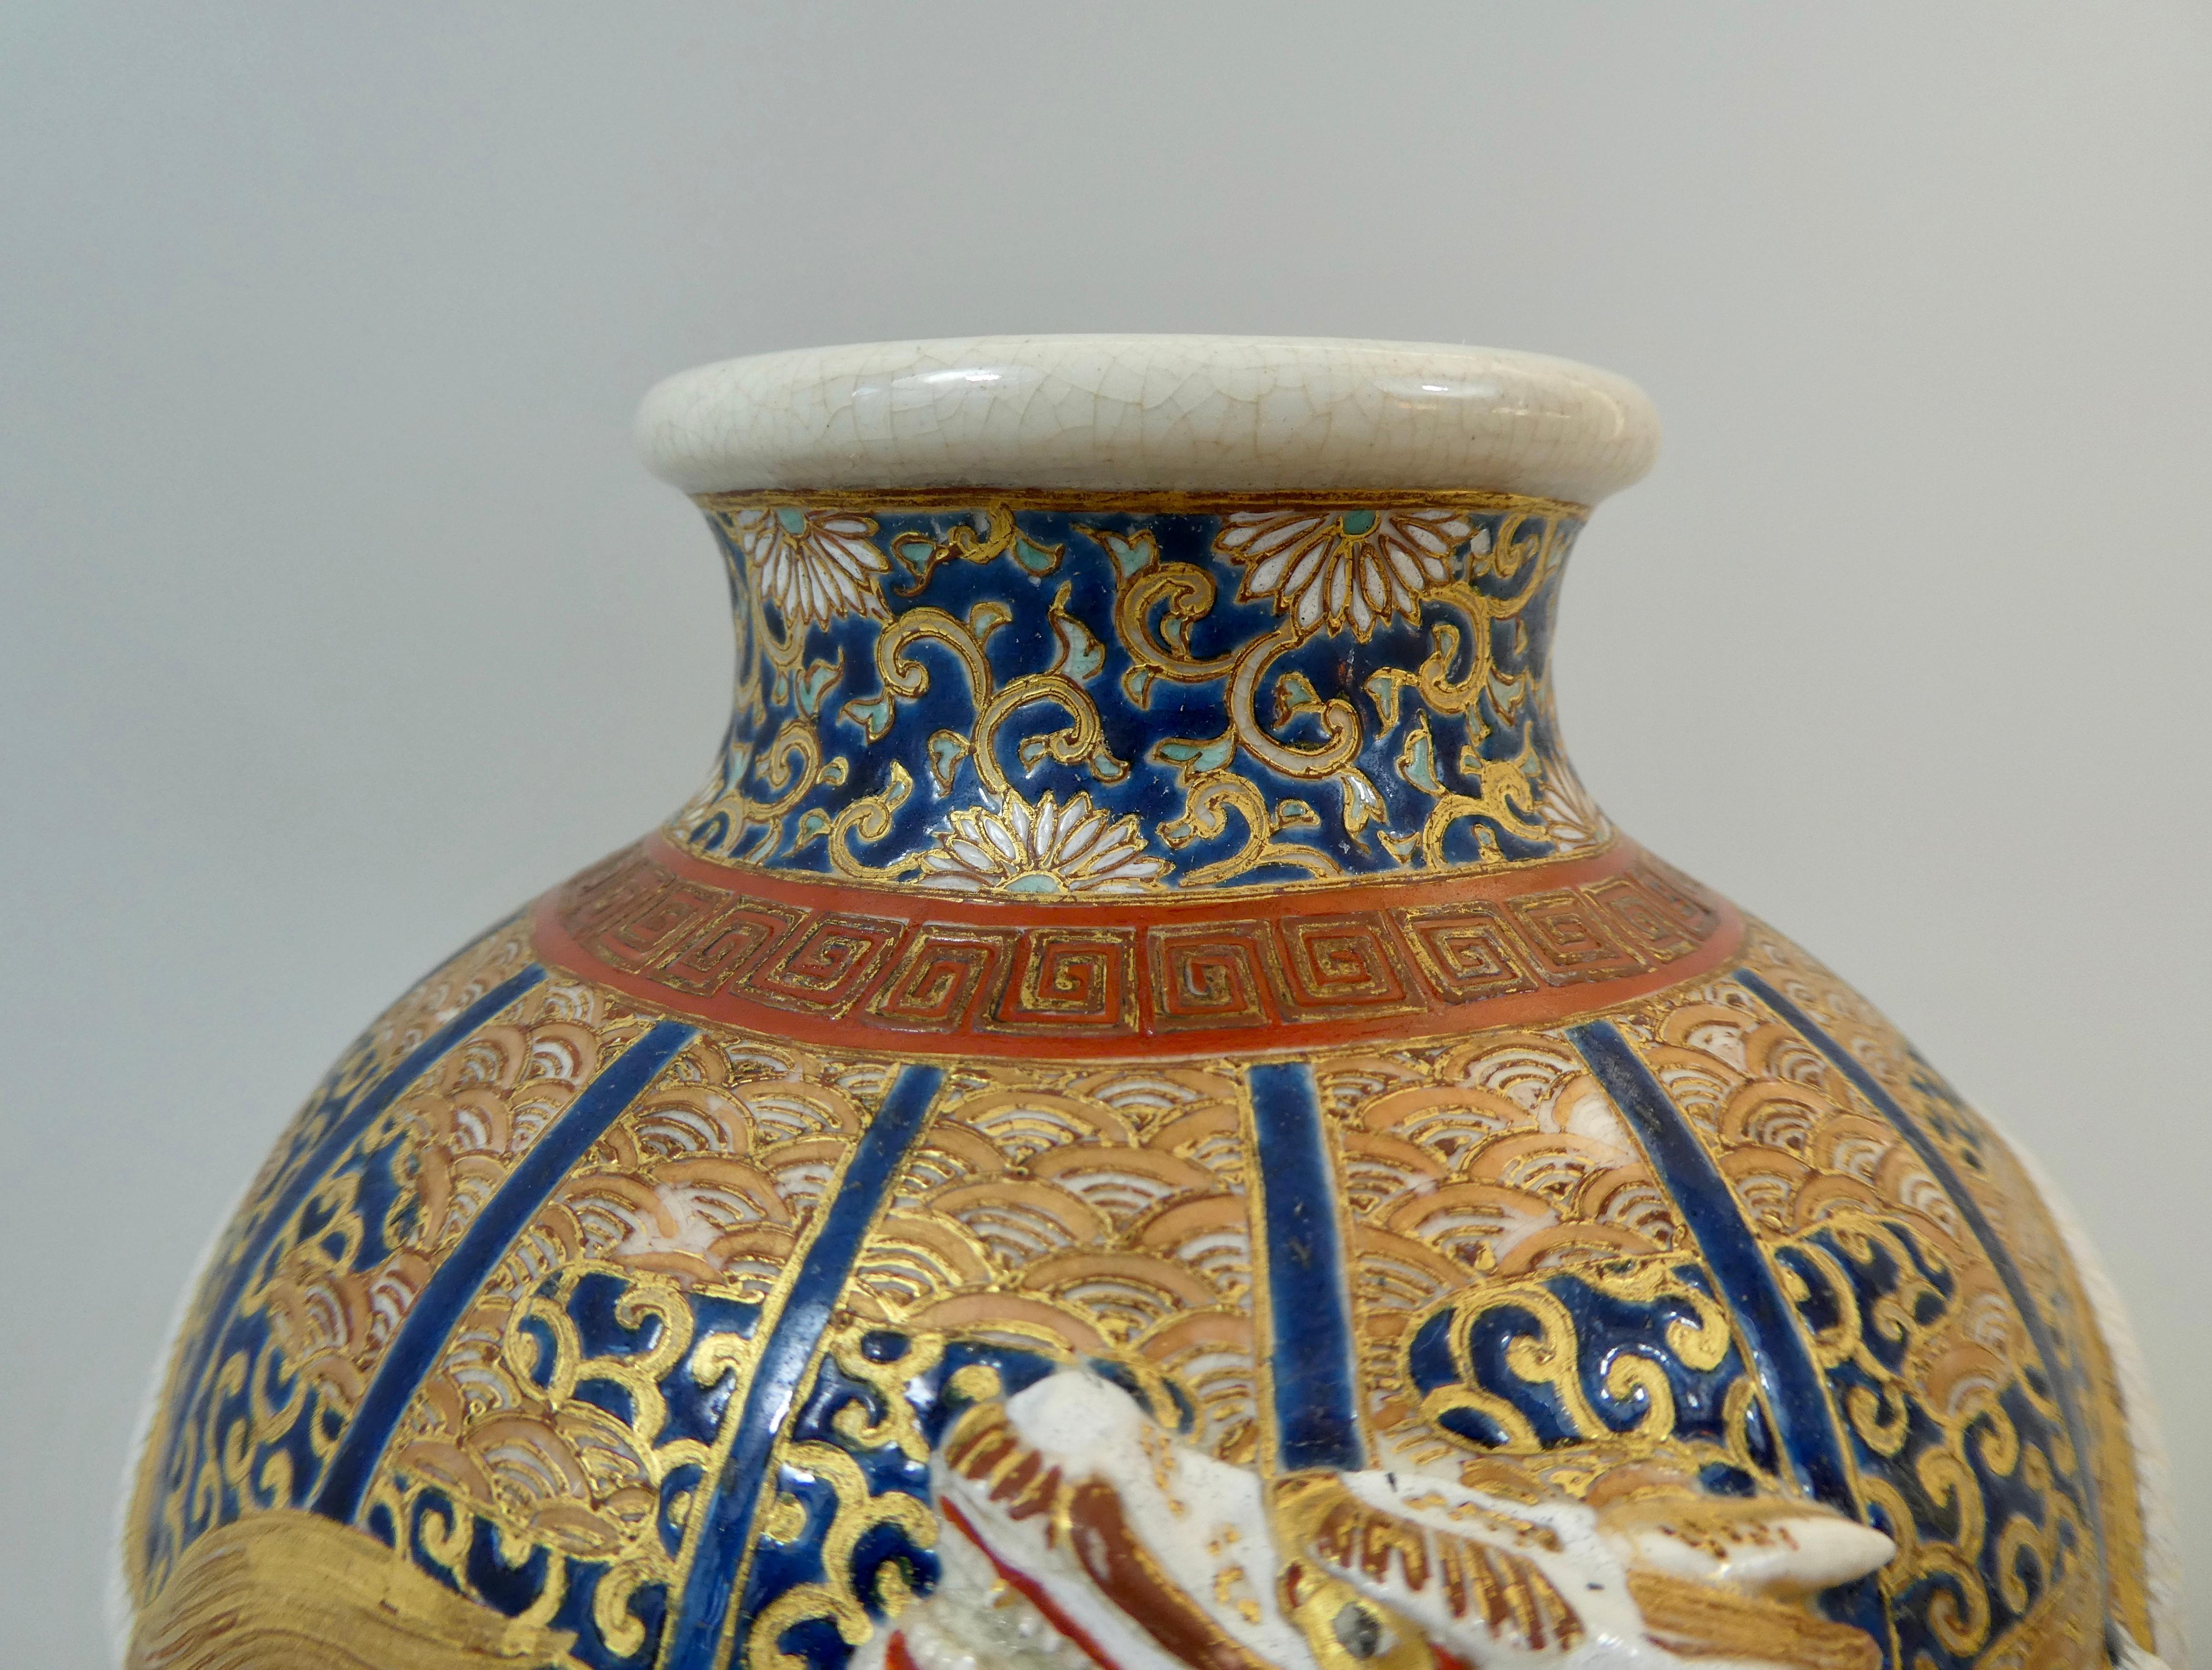 19th Century Imperial Satsuma earthenware vase, circa 1870, Meiji Period.